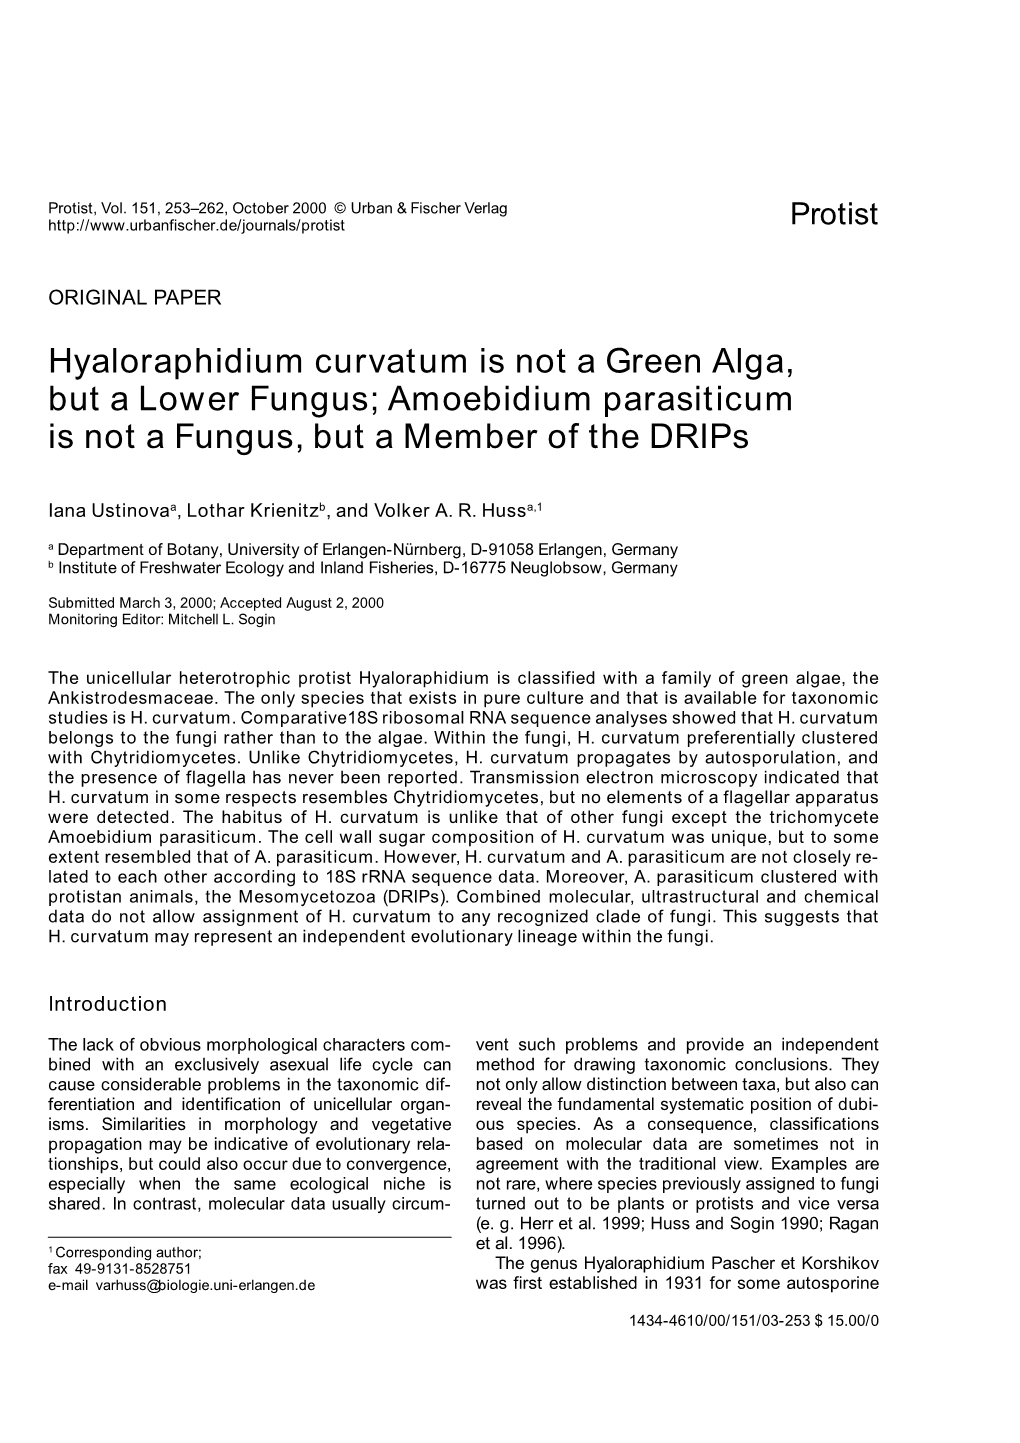 Hyaloraphidium Curvatum Is Not a Green Alga, but a Lower Fungus; Amoebidium Parasiticum Is Not a Fungus, but a Member of the Drips